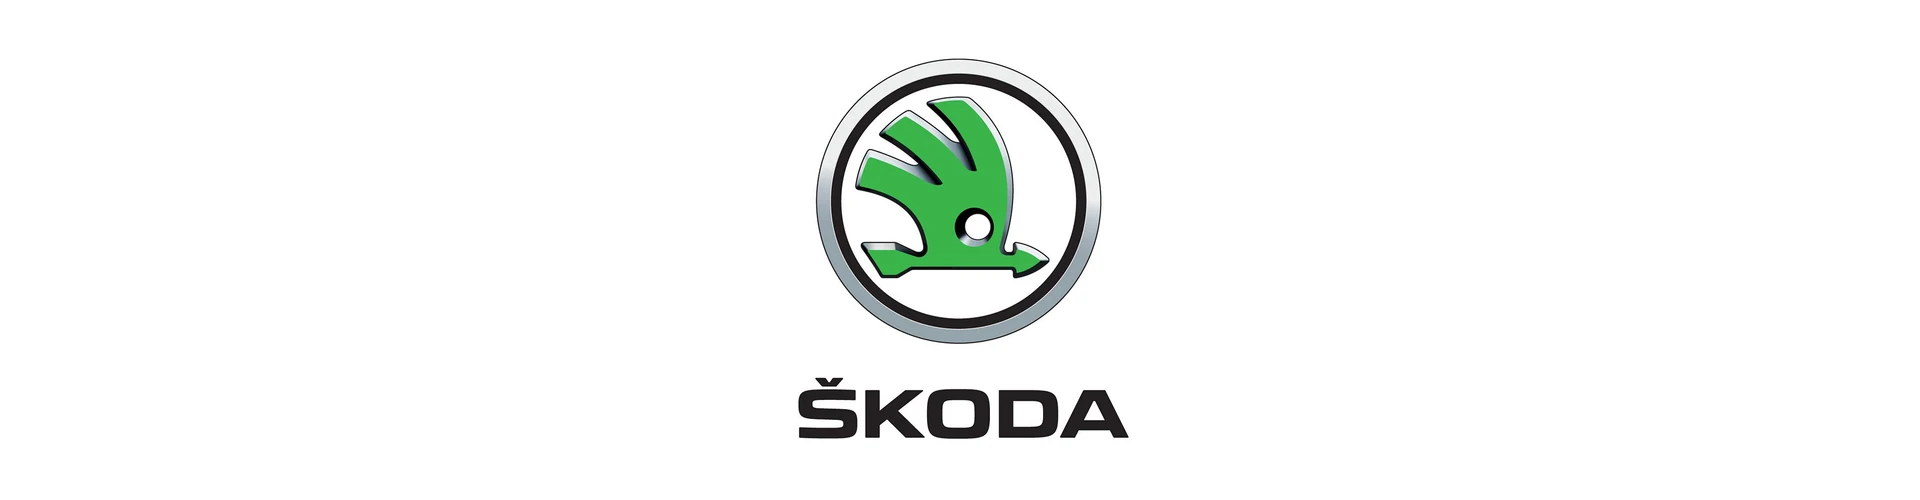 125 years of ŠKODA logo evolution